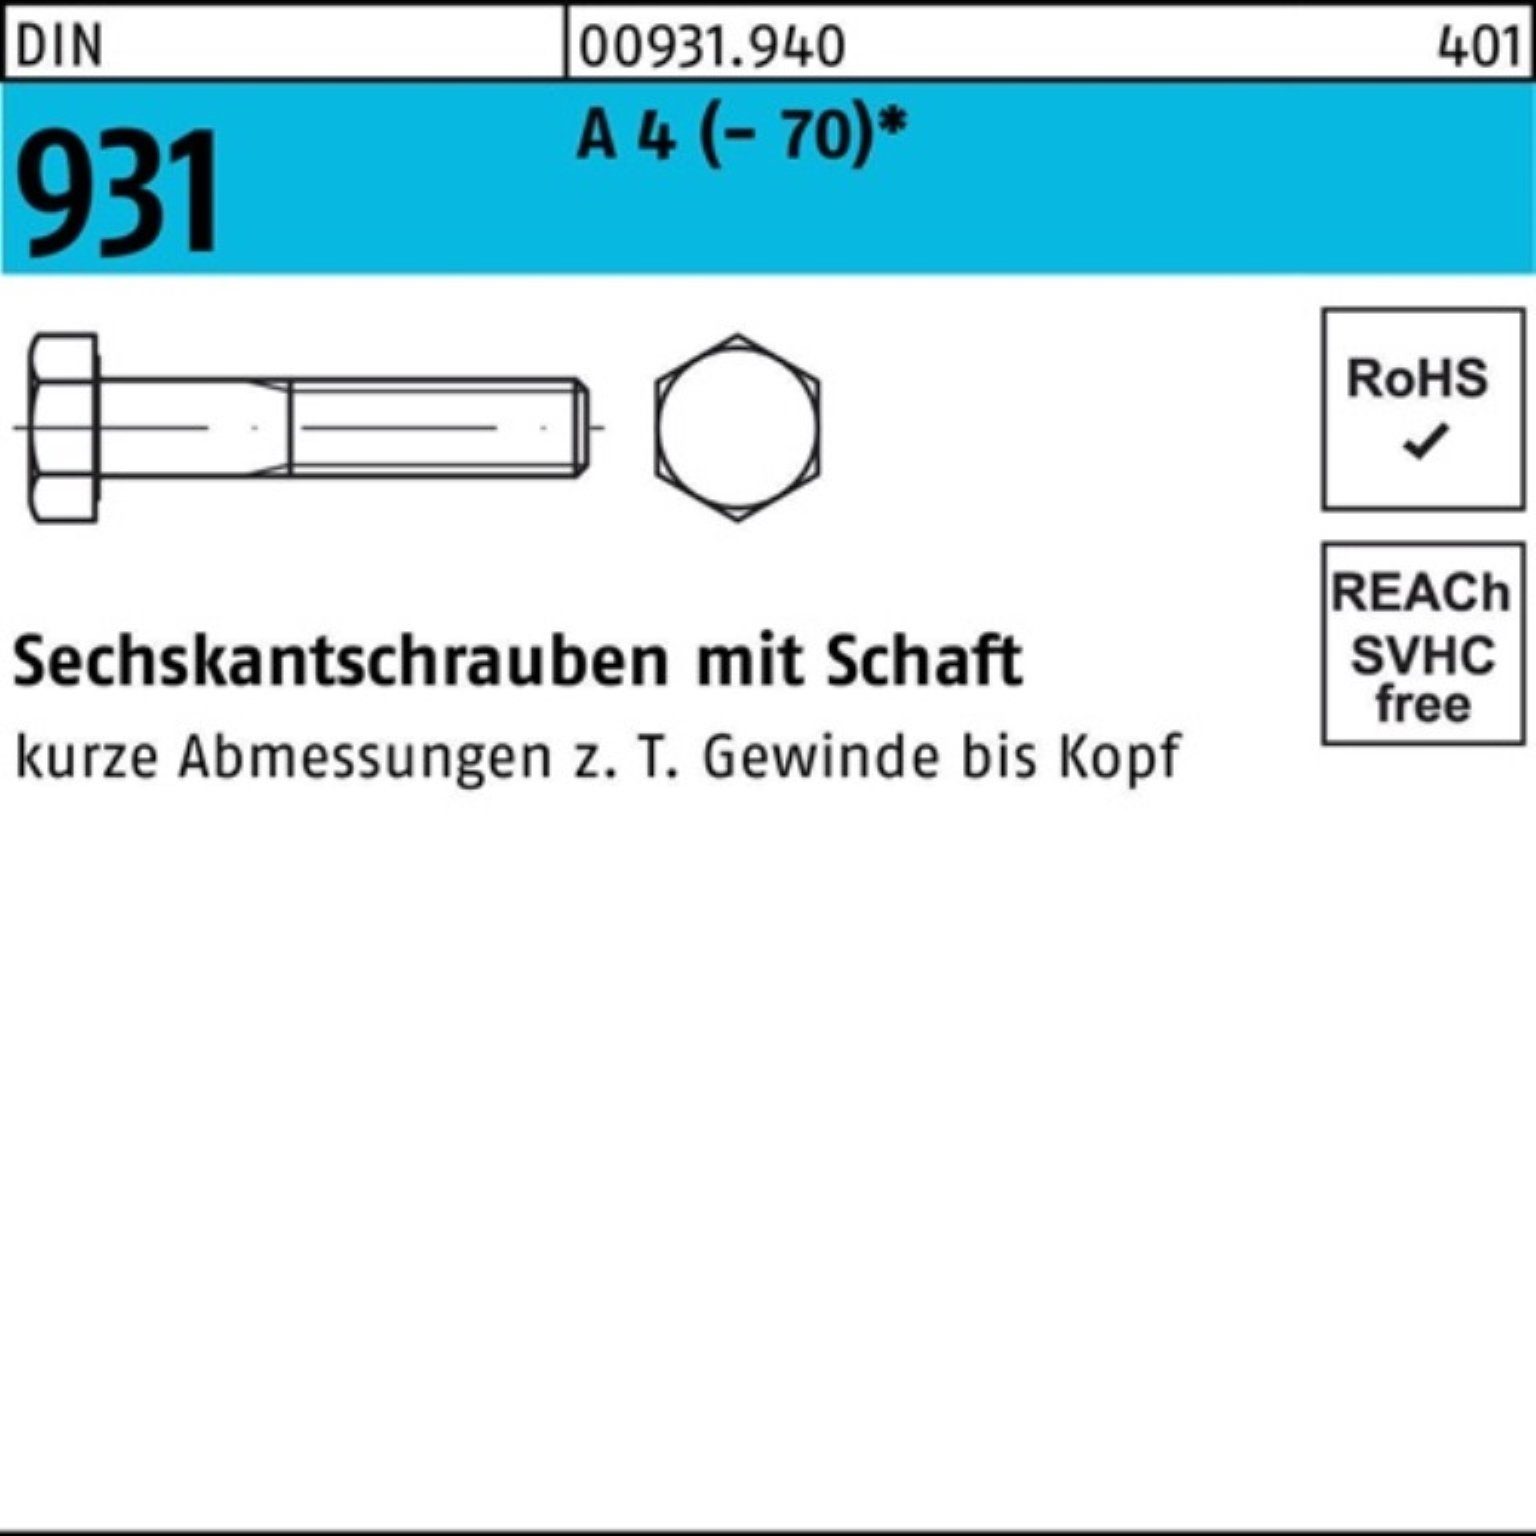 Reyher Sechskantschraube 100er Pack Sechskantschraube DIN 931 Schaft M5x 30 A 4 (70) 100 Stü | Schrauben